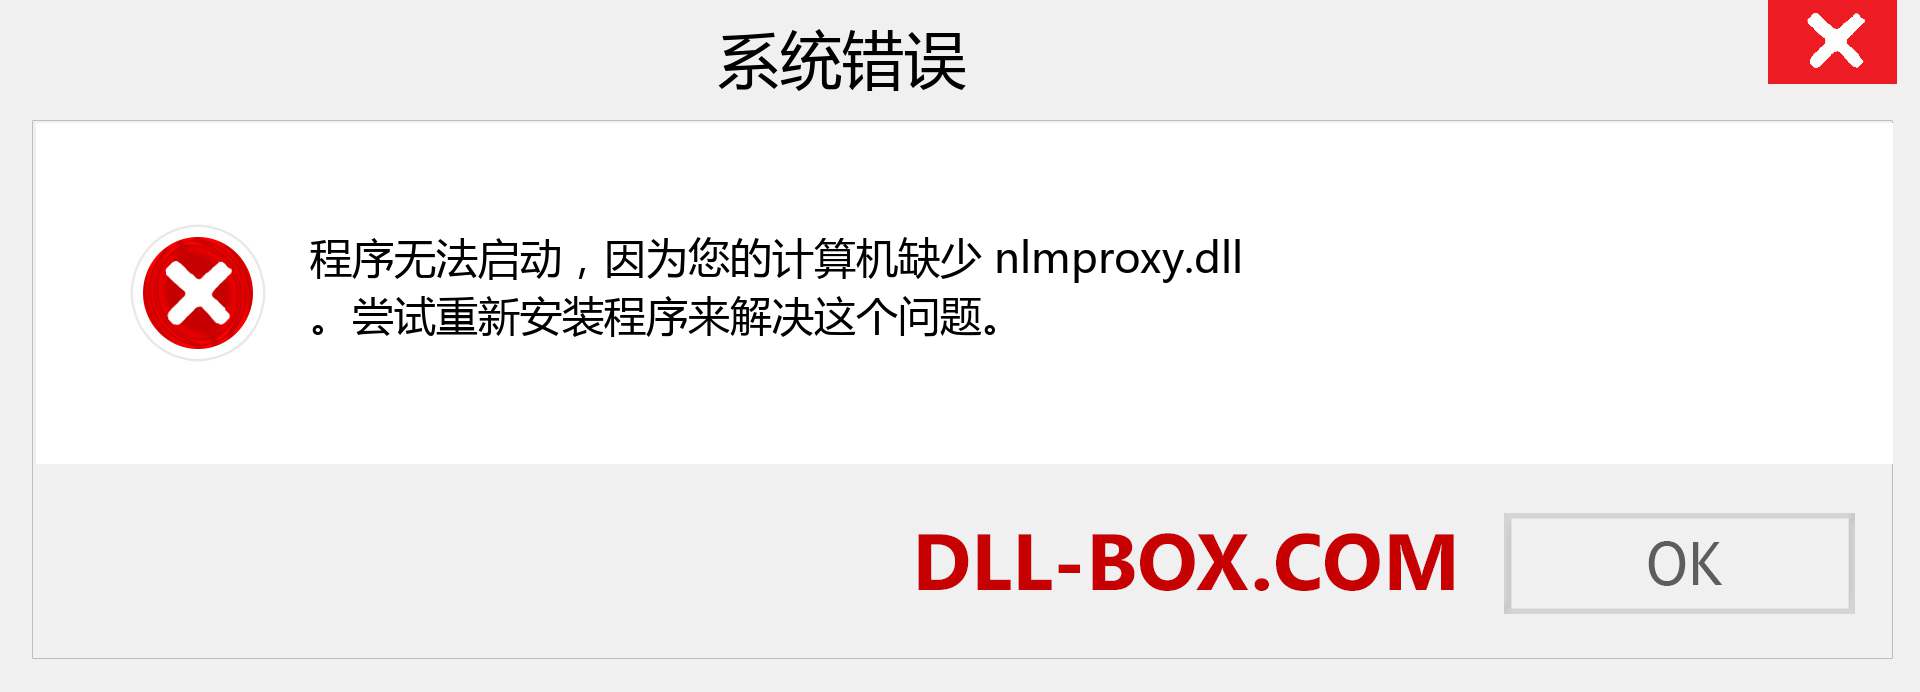 nlmproxy.dll 文件丢失？。 适用于 Windows 7、8、10 的下载 - 修复 Windows、照片、图像上的 nlmproxy dll 丢失错误